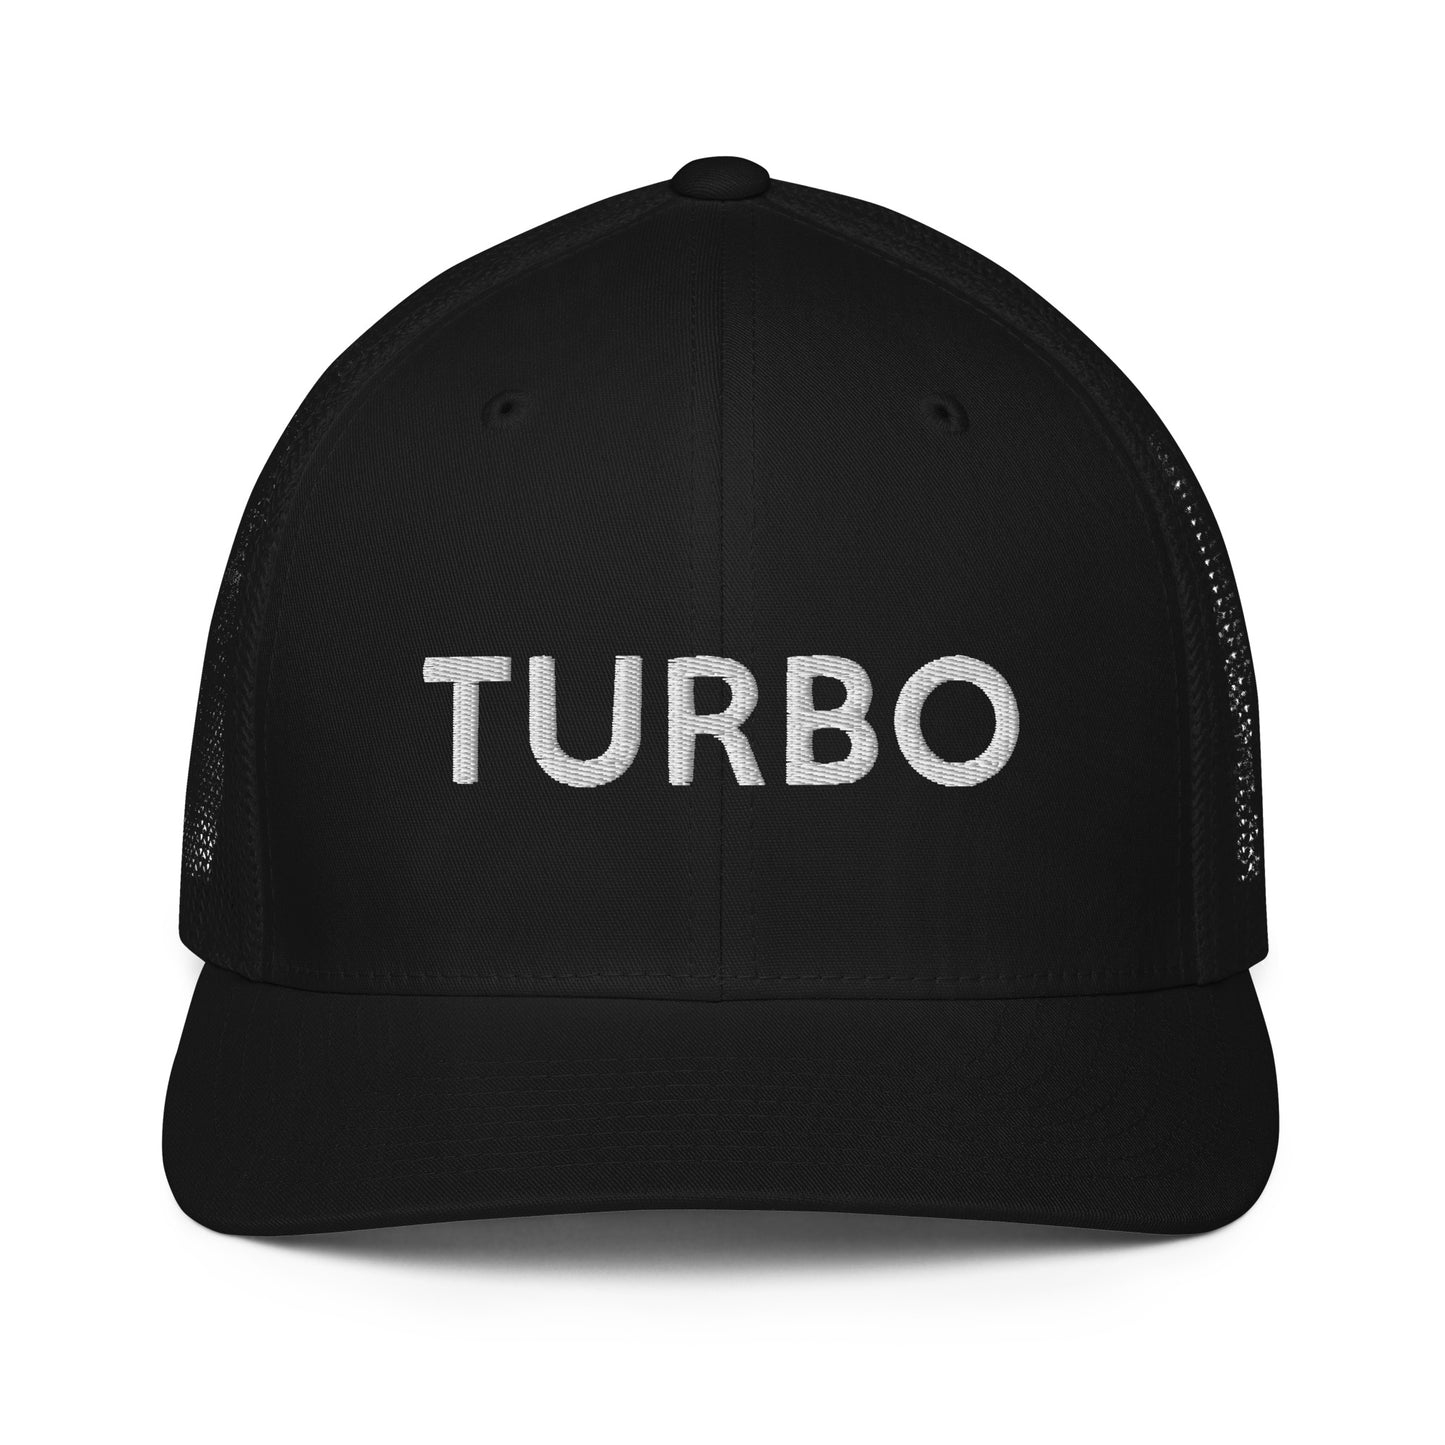 Turbo Dome Cover